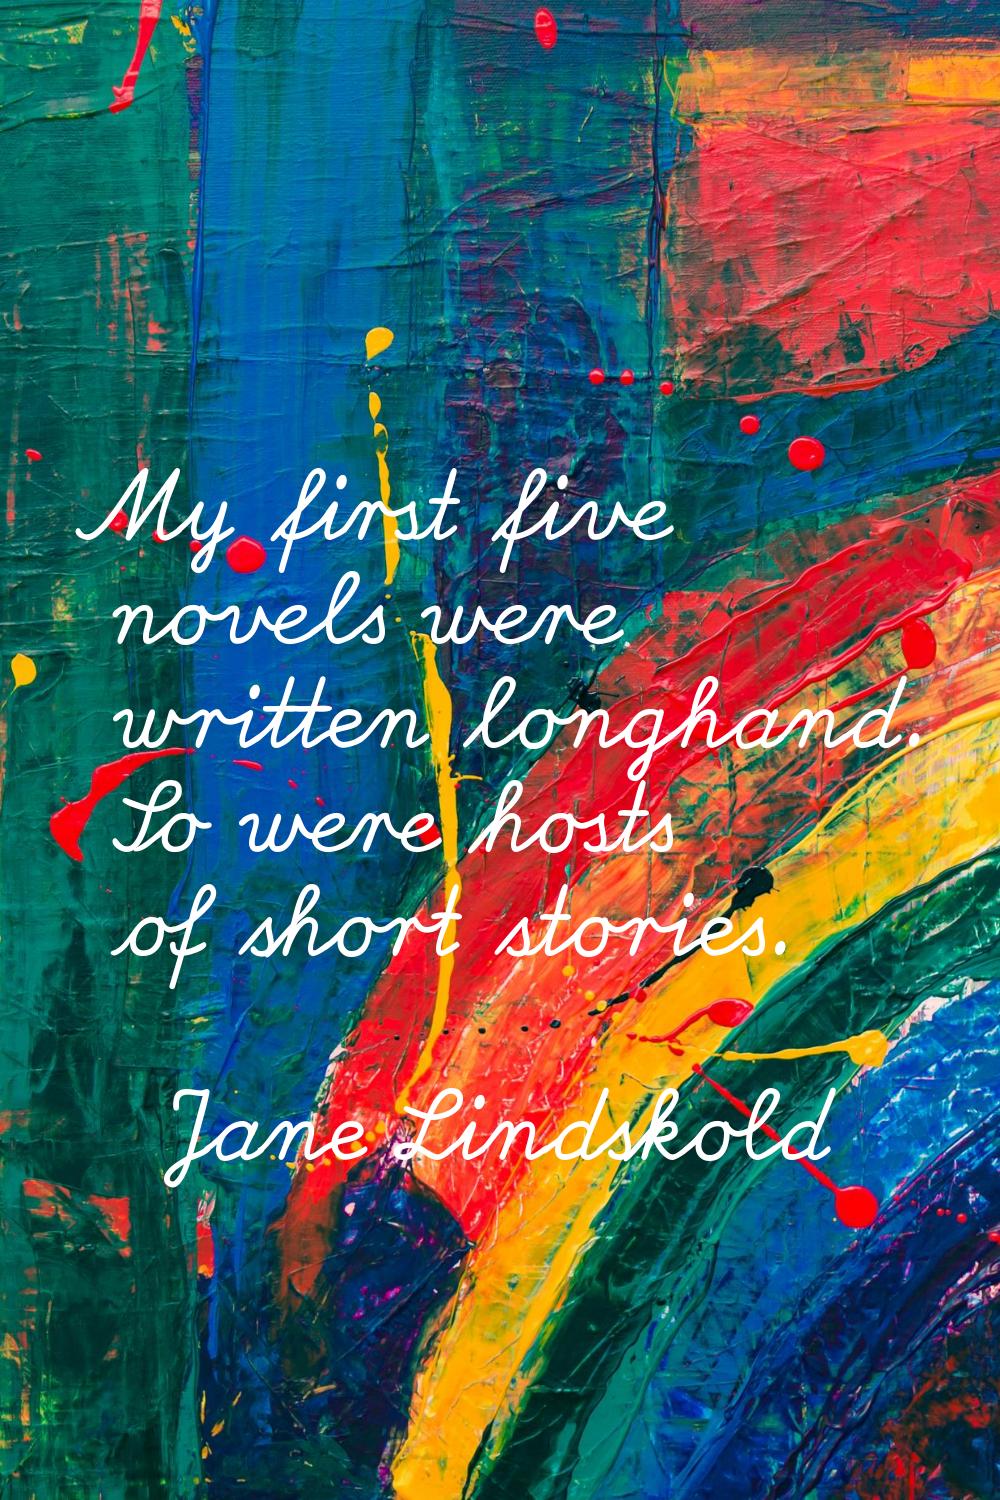 My first five novels were written longhand. So were hosts of short stories.